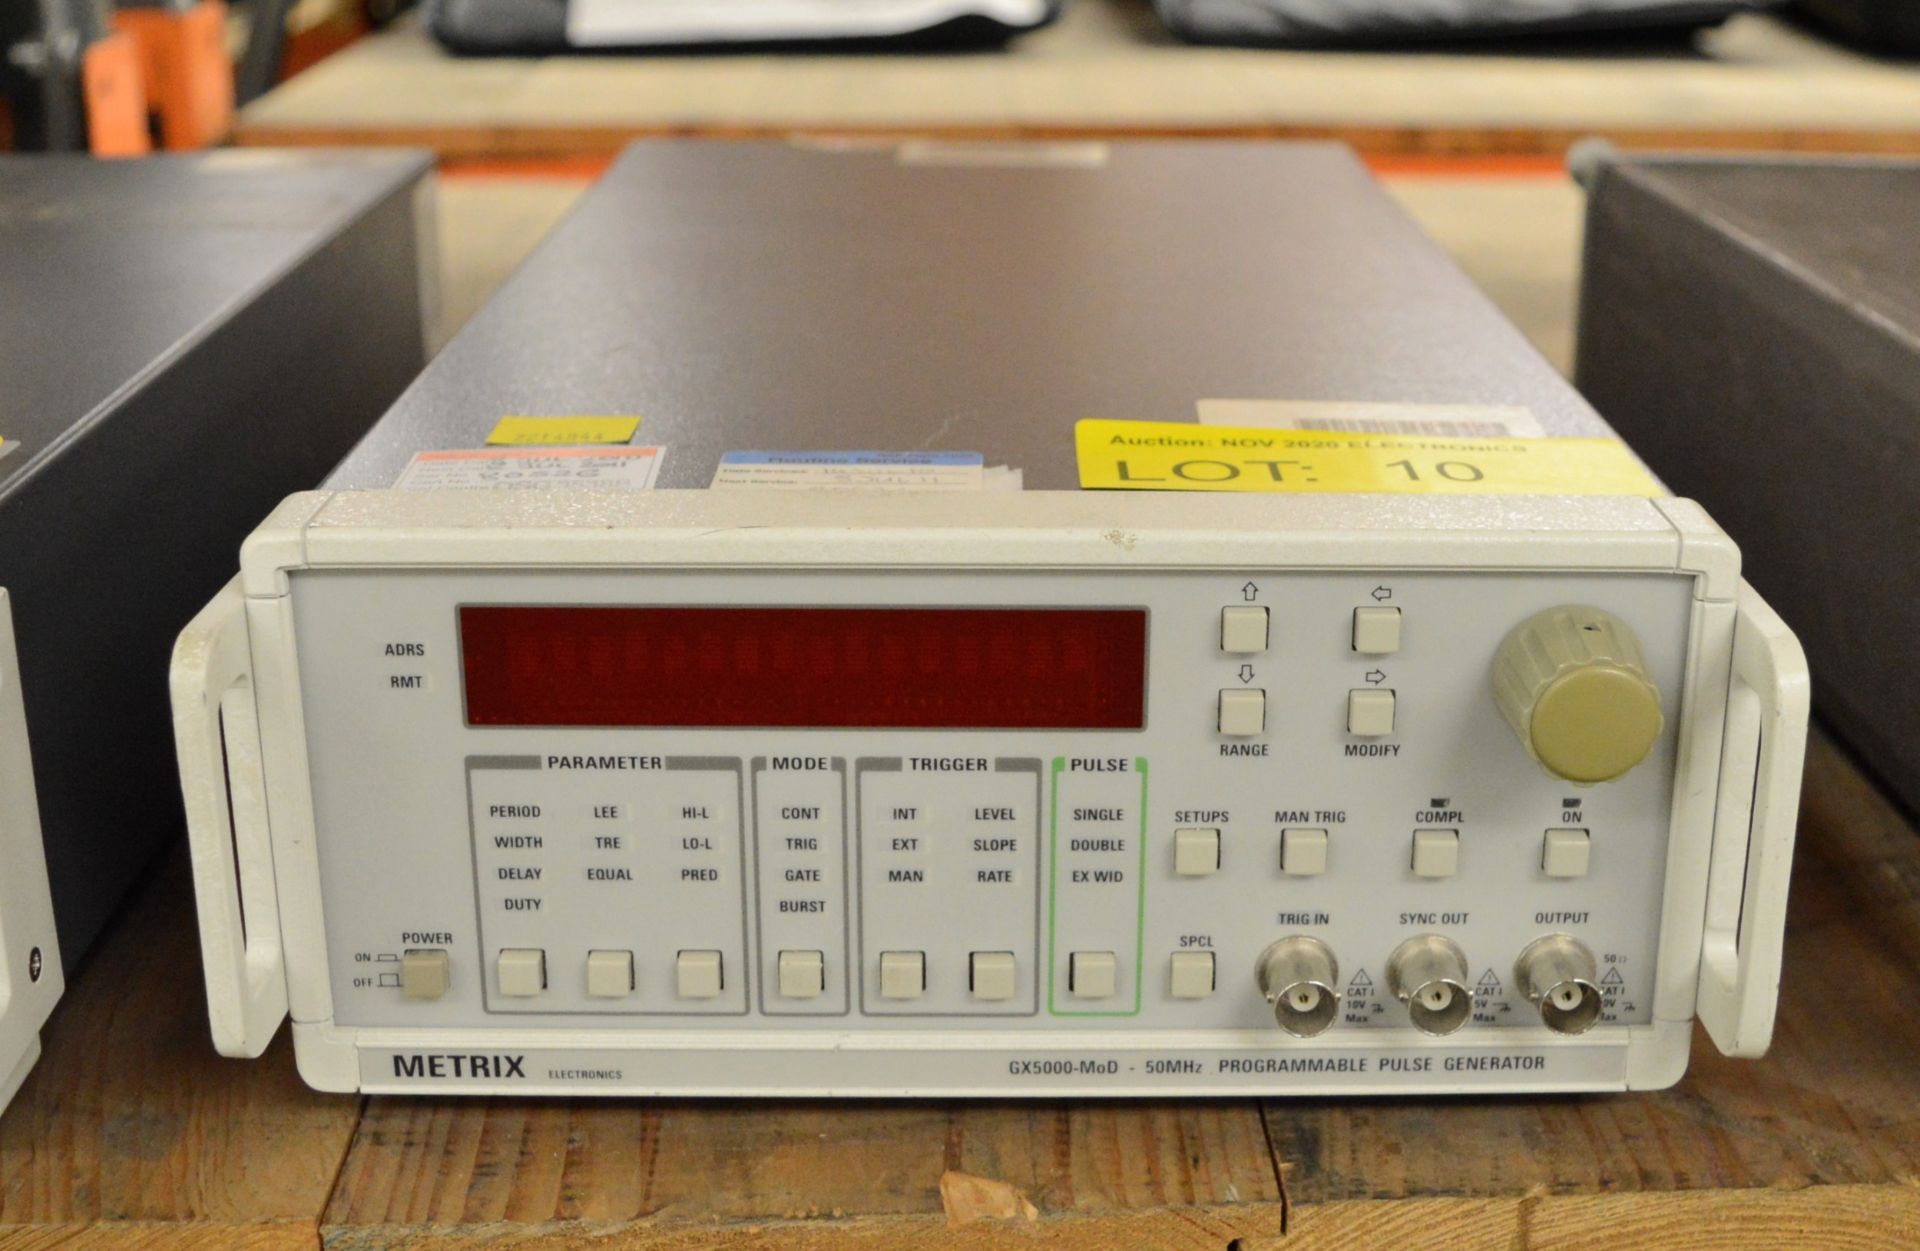 Metrix GX5000 50MHz programmable pulse generator